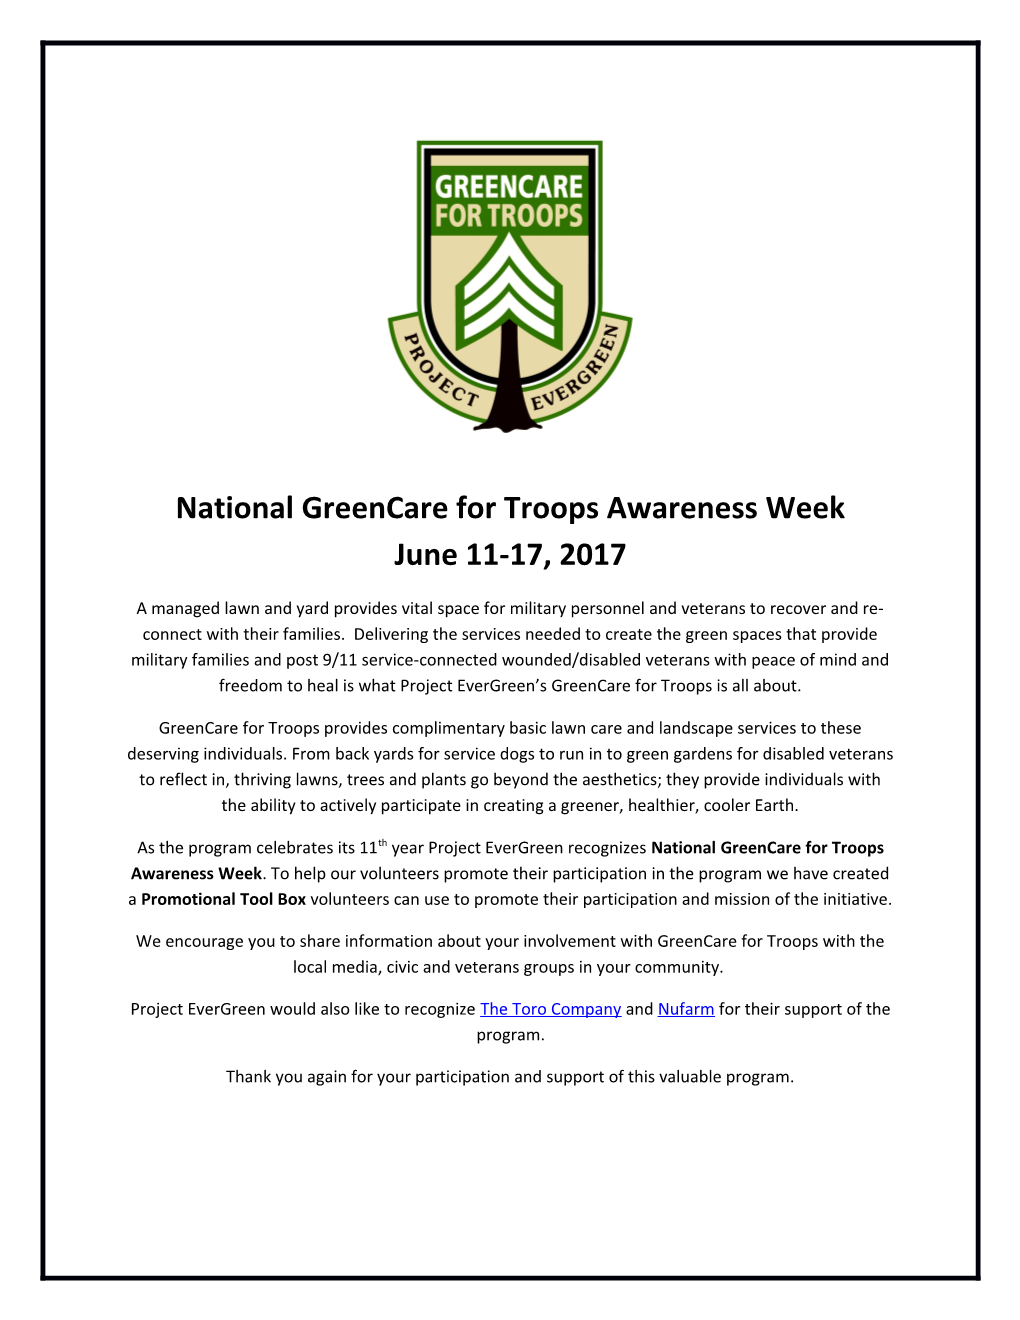 National Greencare for Troops Awareness Week June 11-17, 2017